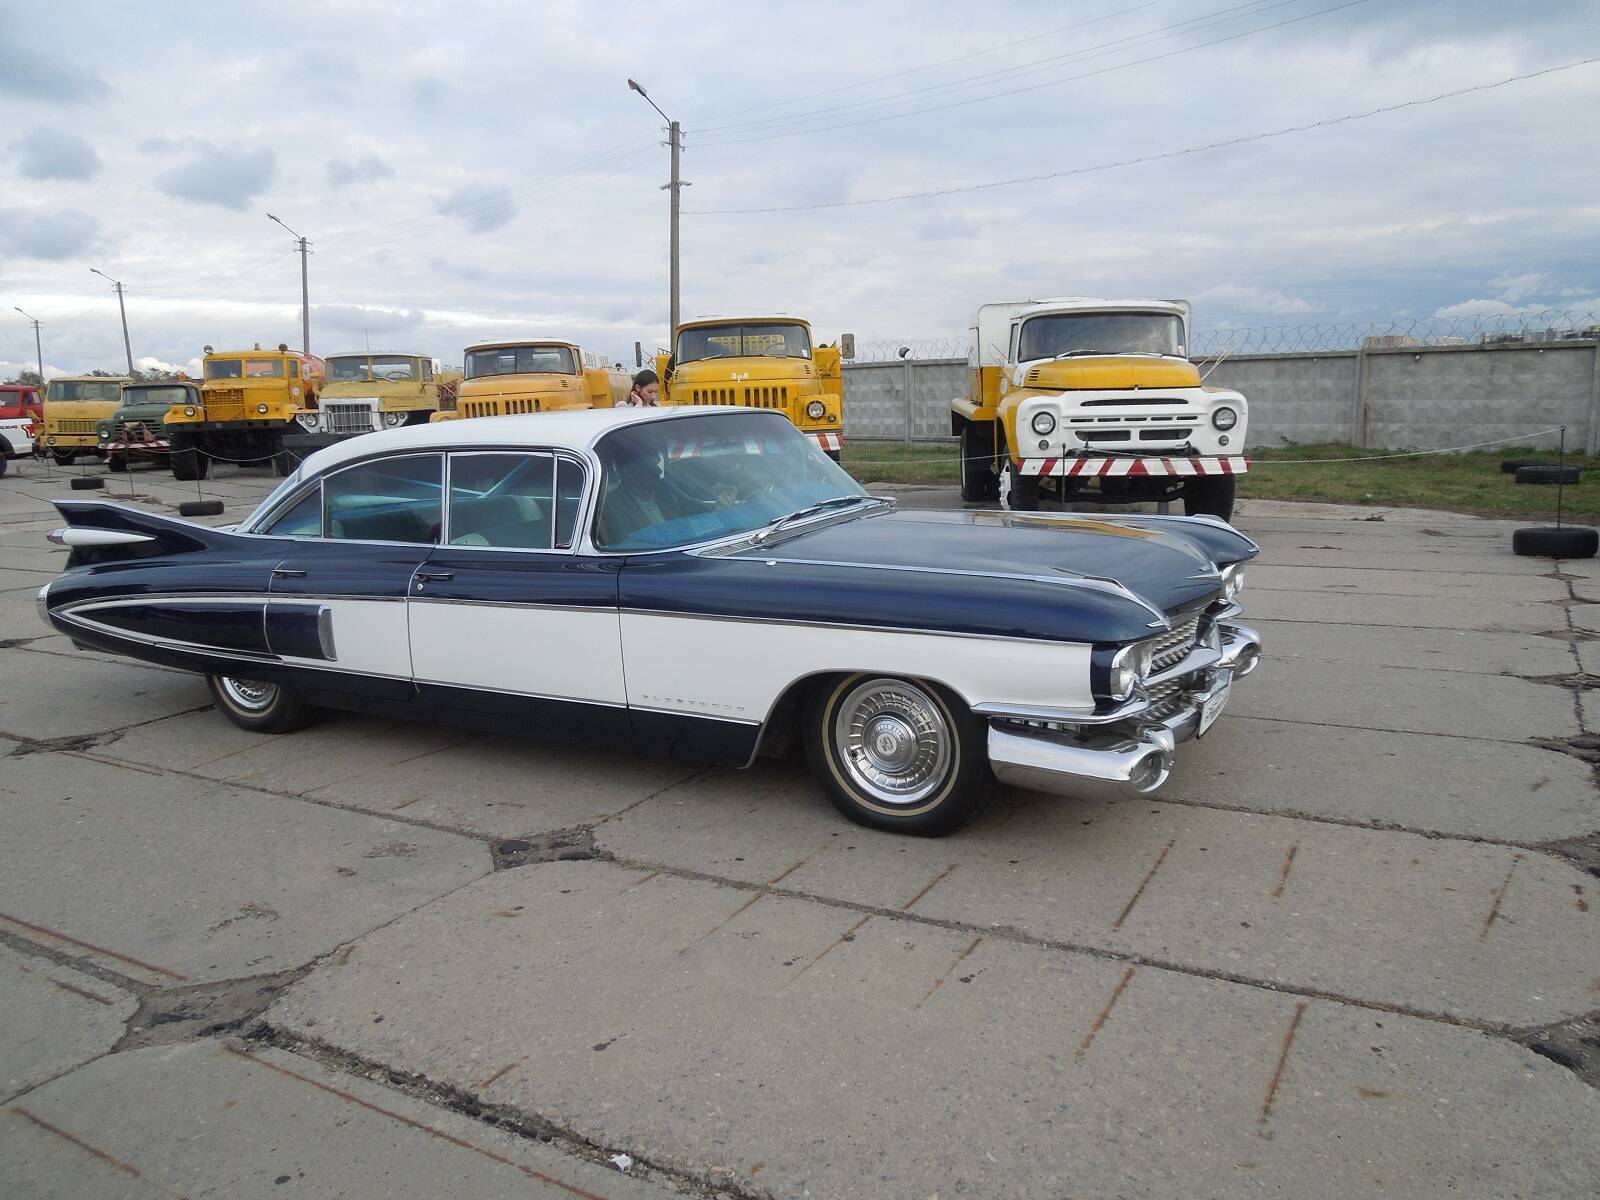 За Cadillac Fleetwood 1959 года просят серьезную сумму.